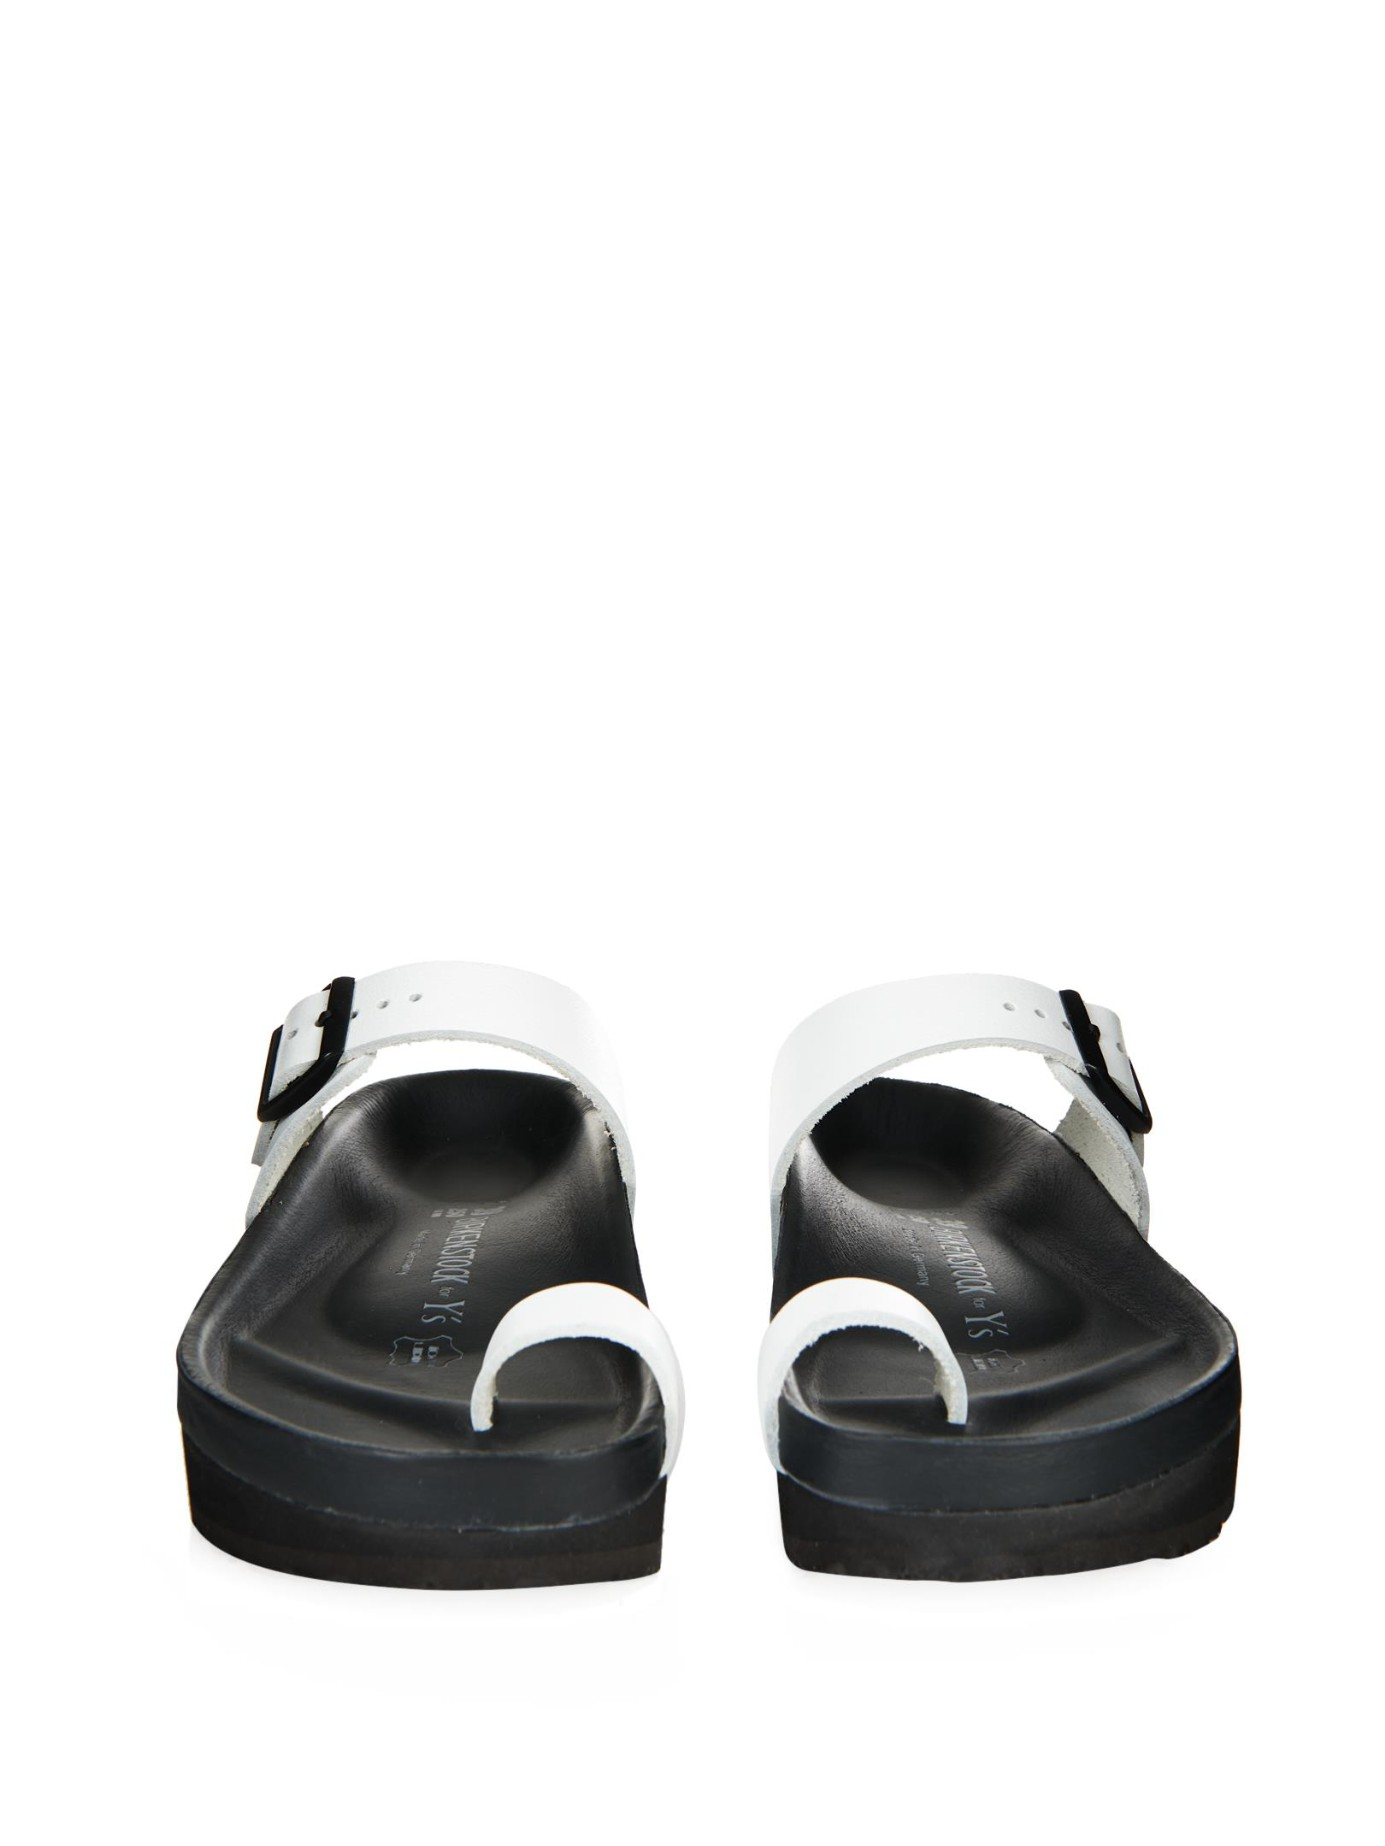 Y's Yohji Yamamoto X Birkenstock Leather Sandals in White - Lyst